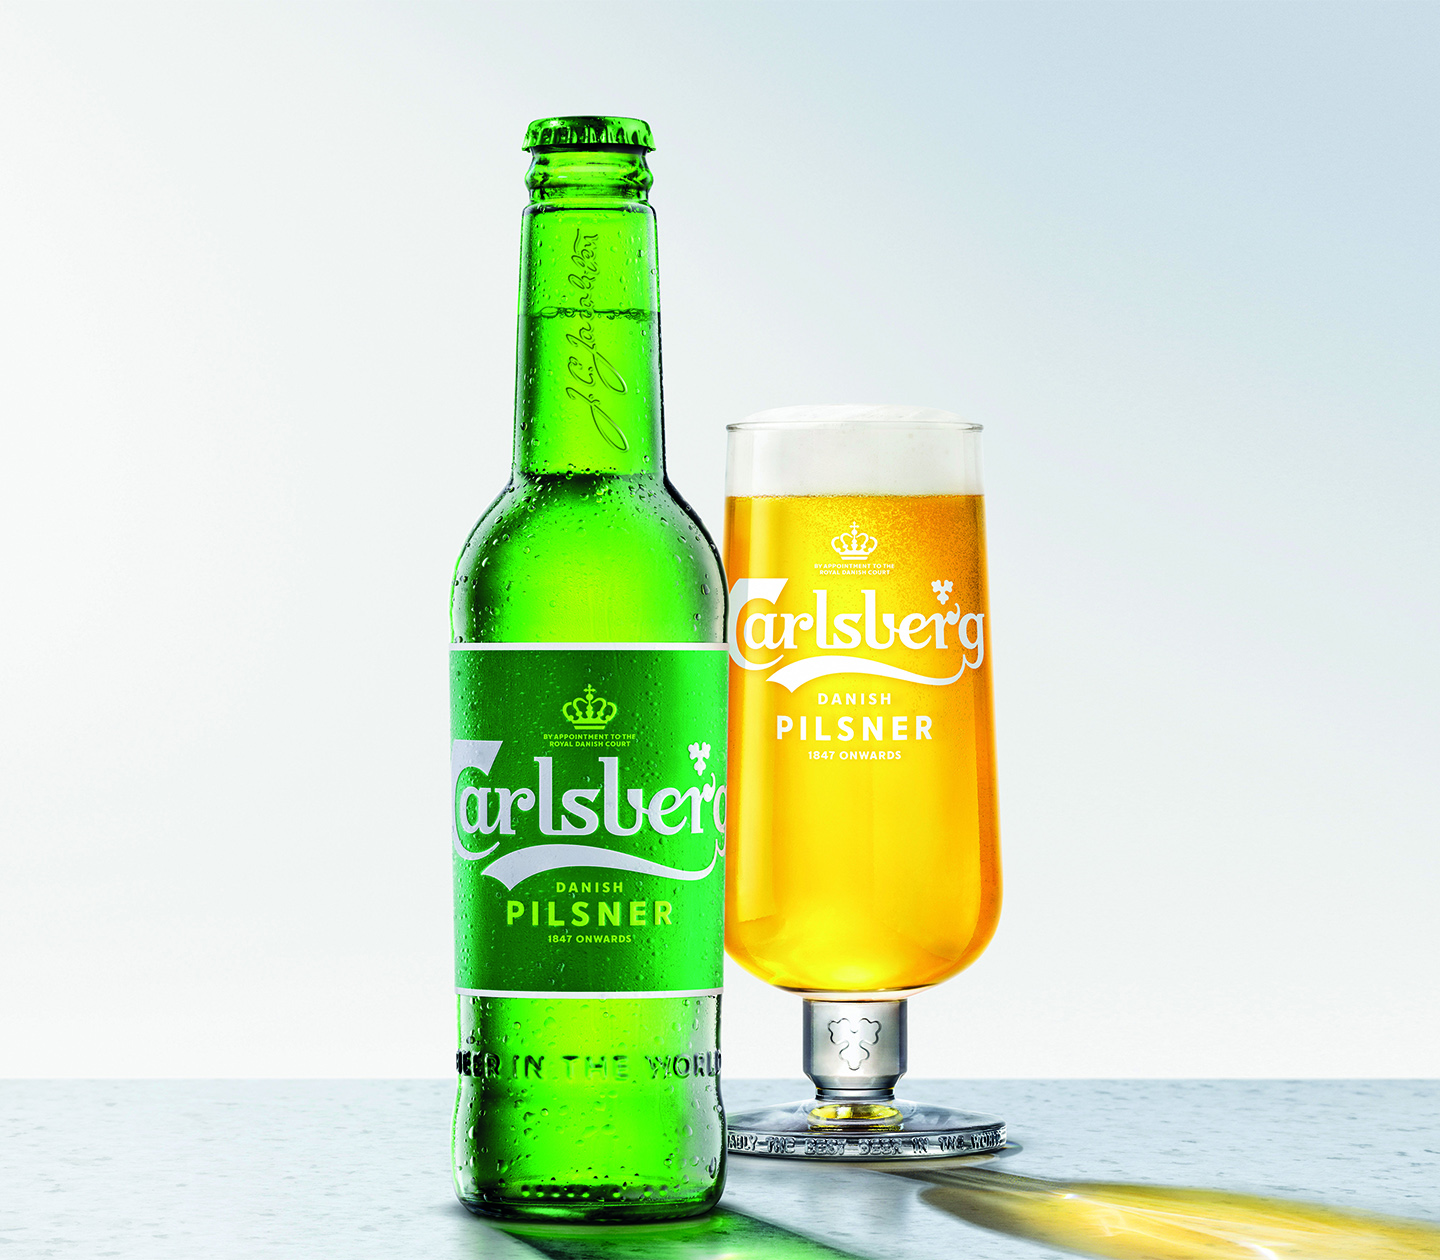 Pilsner bottle and glass